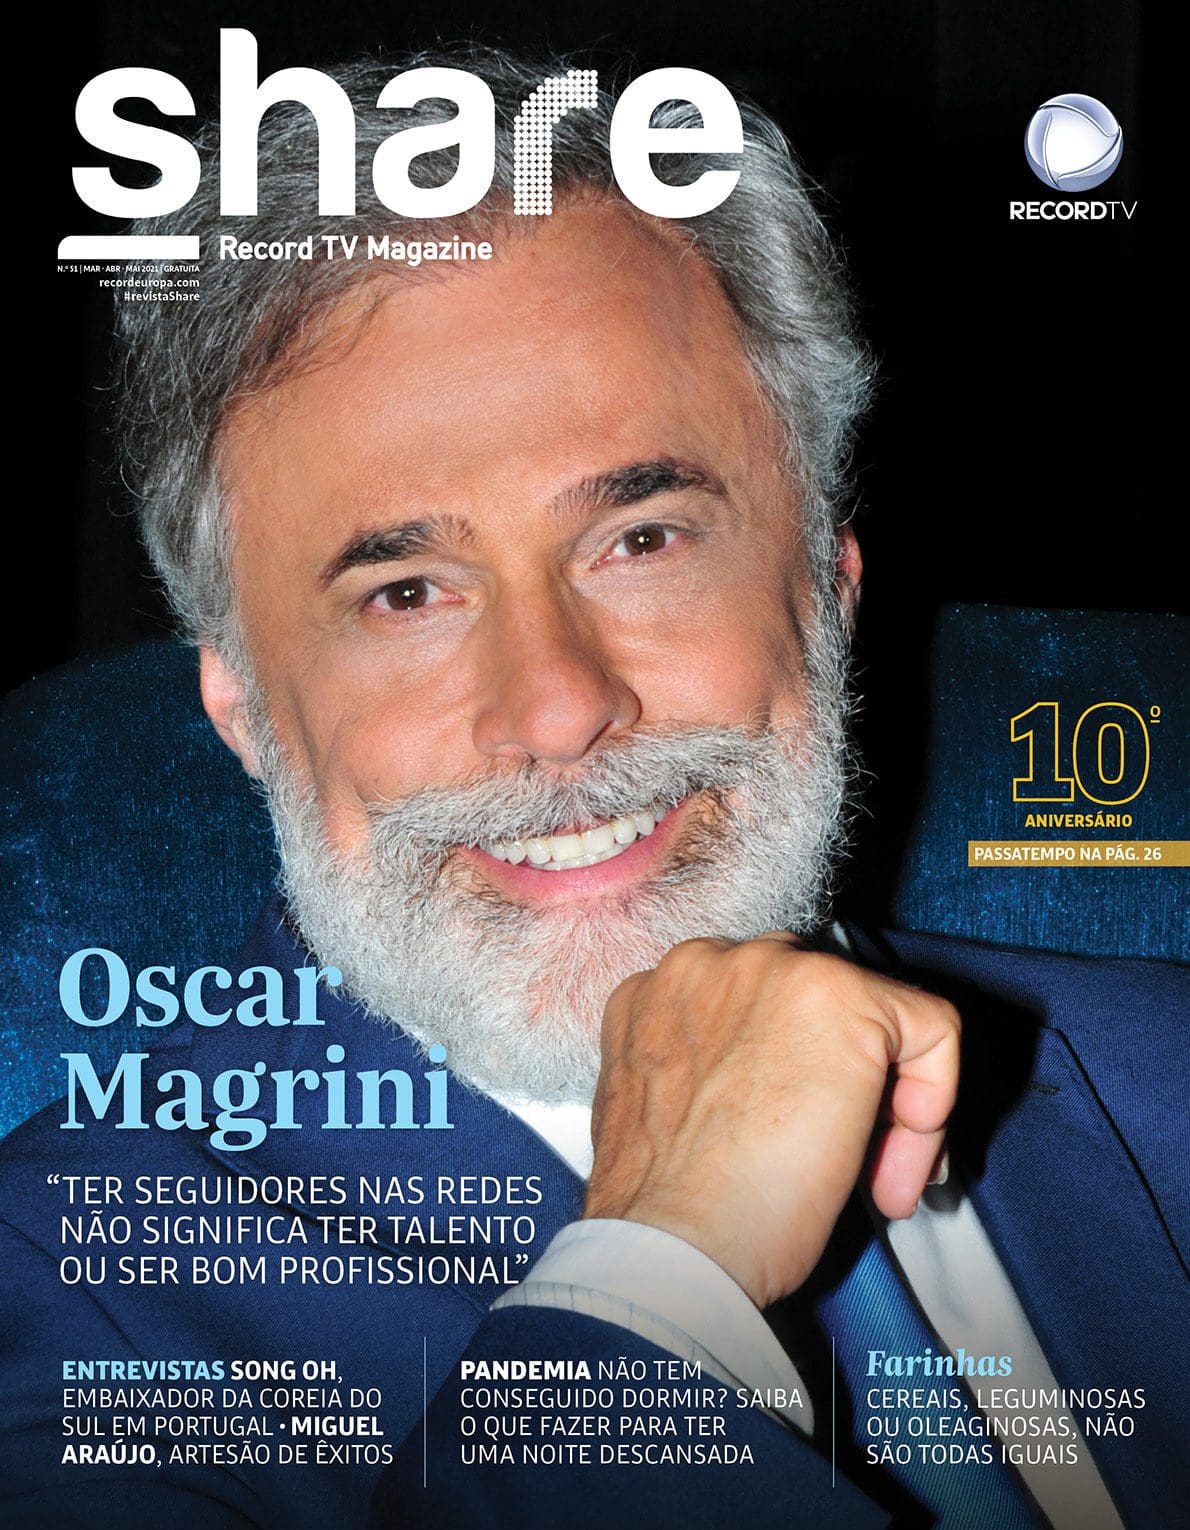 Share Magazine 51 - Oscar Magrini